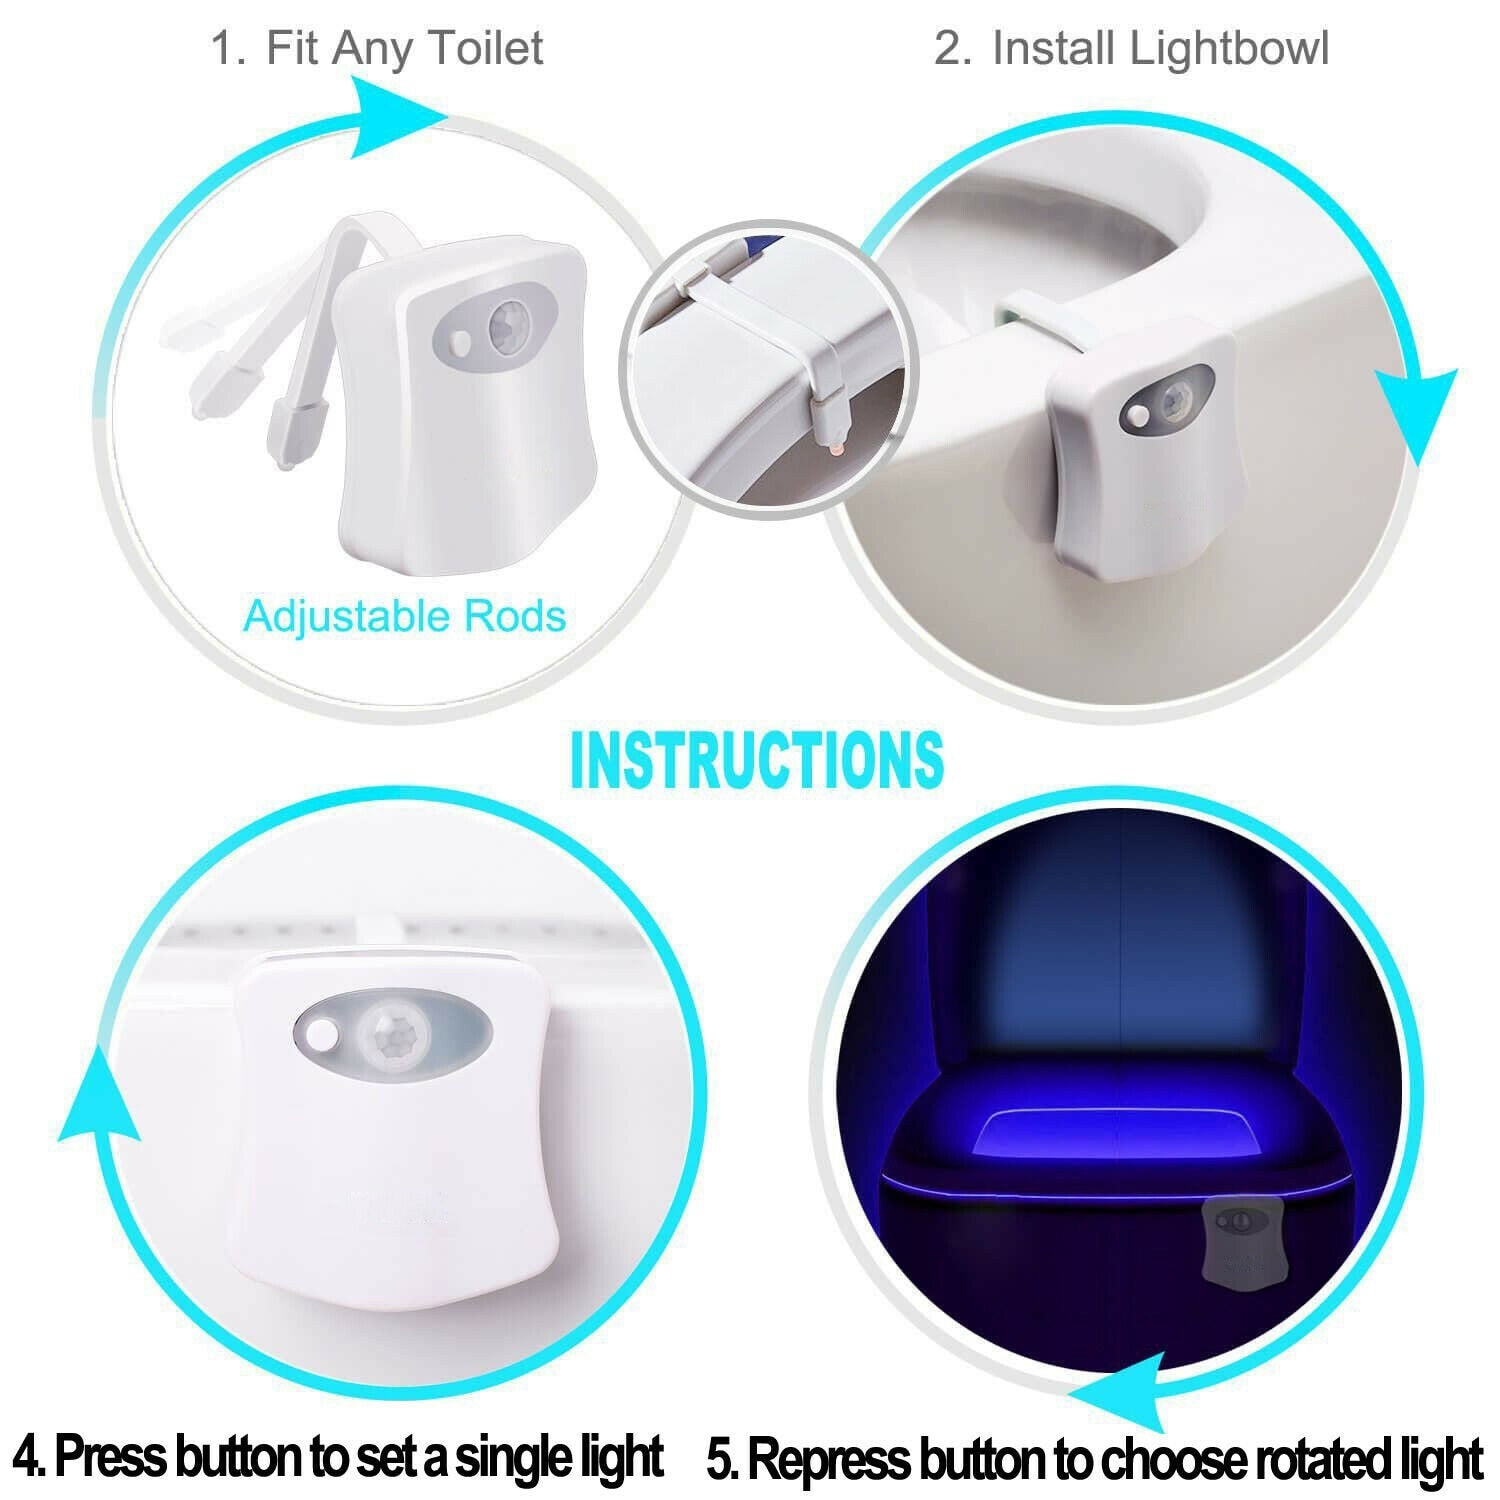 16 Colors Toilet Night Light Bowl Human Motion Sensor Automatic Bathroom  Light